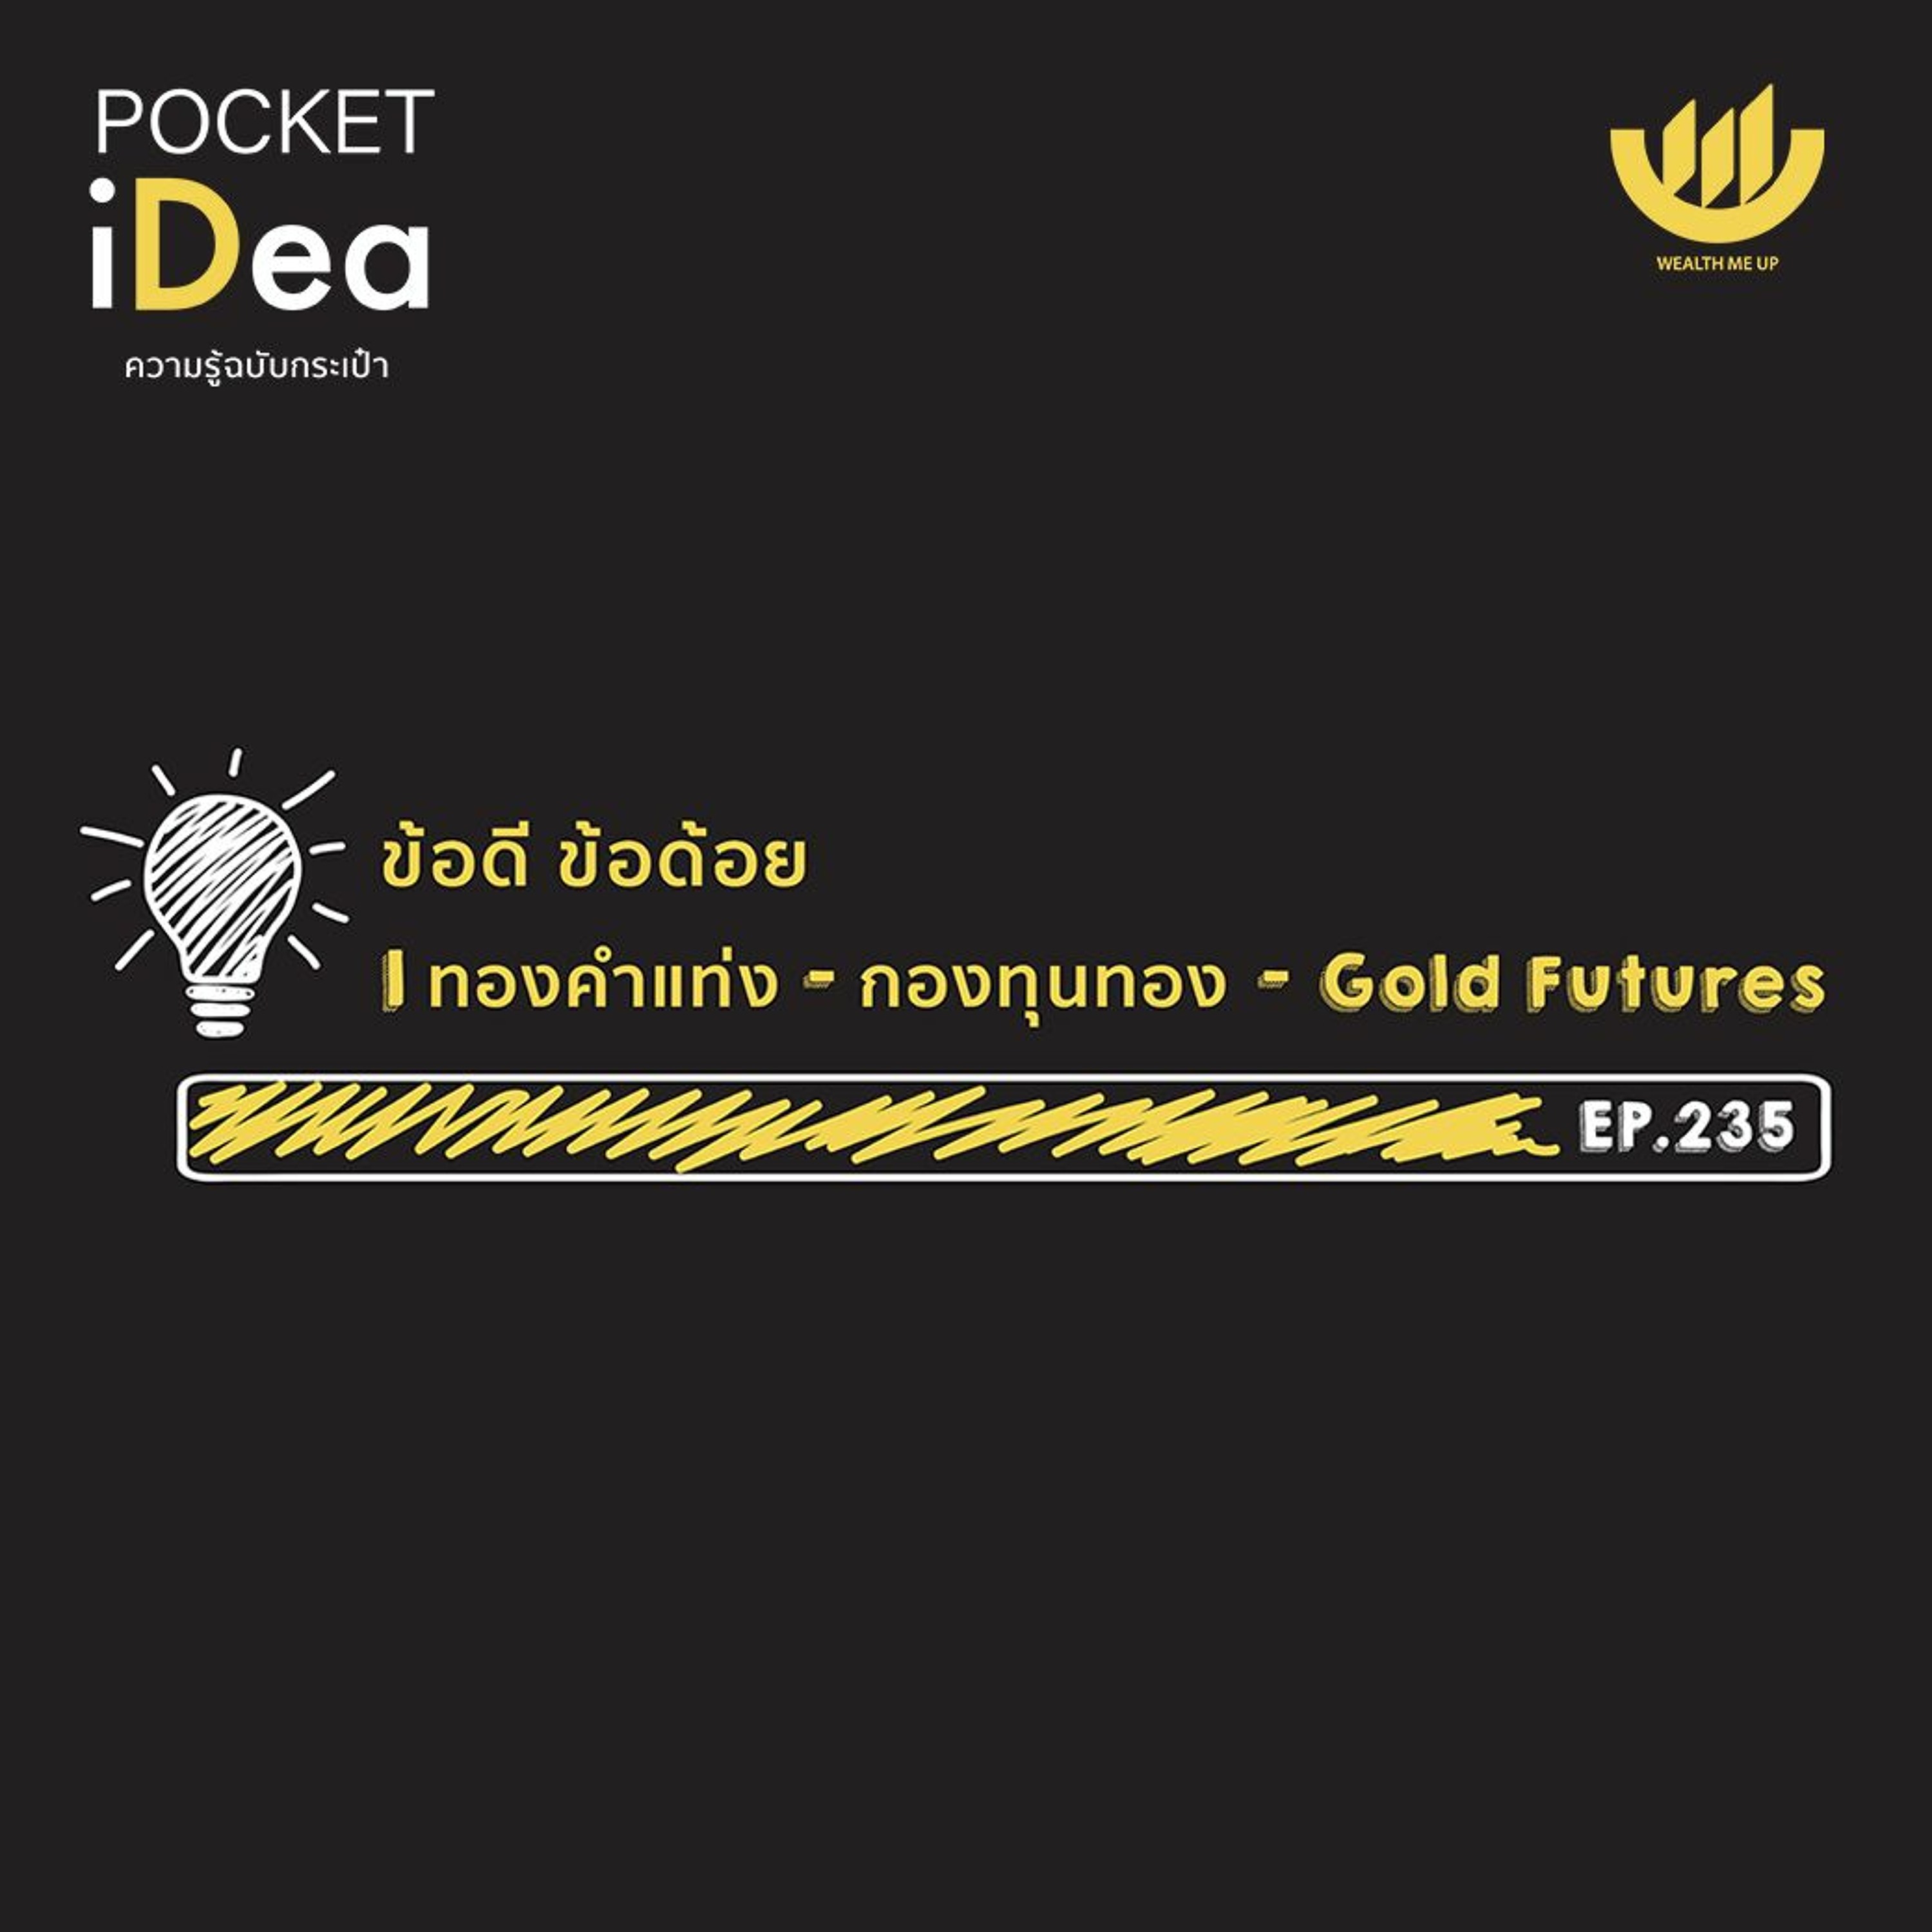 POCKET IDEA EP.235 | ข้อดี ข้อด้อย | ทองคำแท่ง - กองทุนทอง - Gold Futures